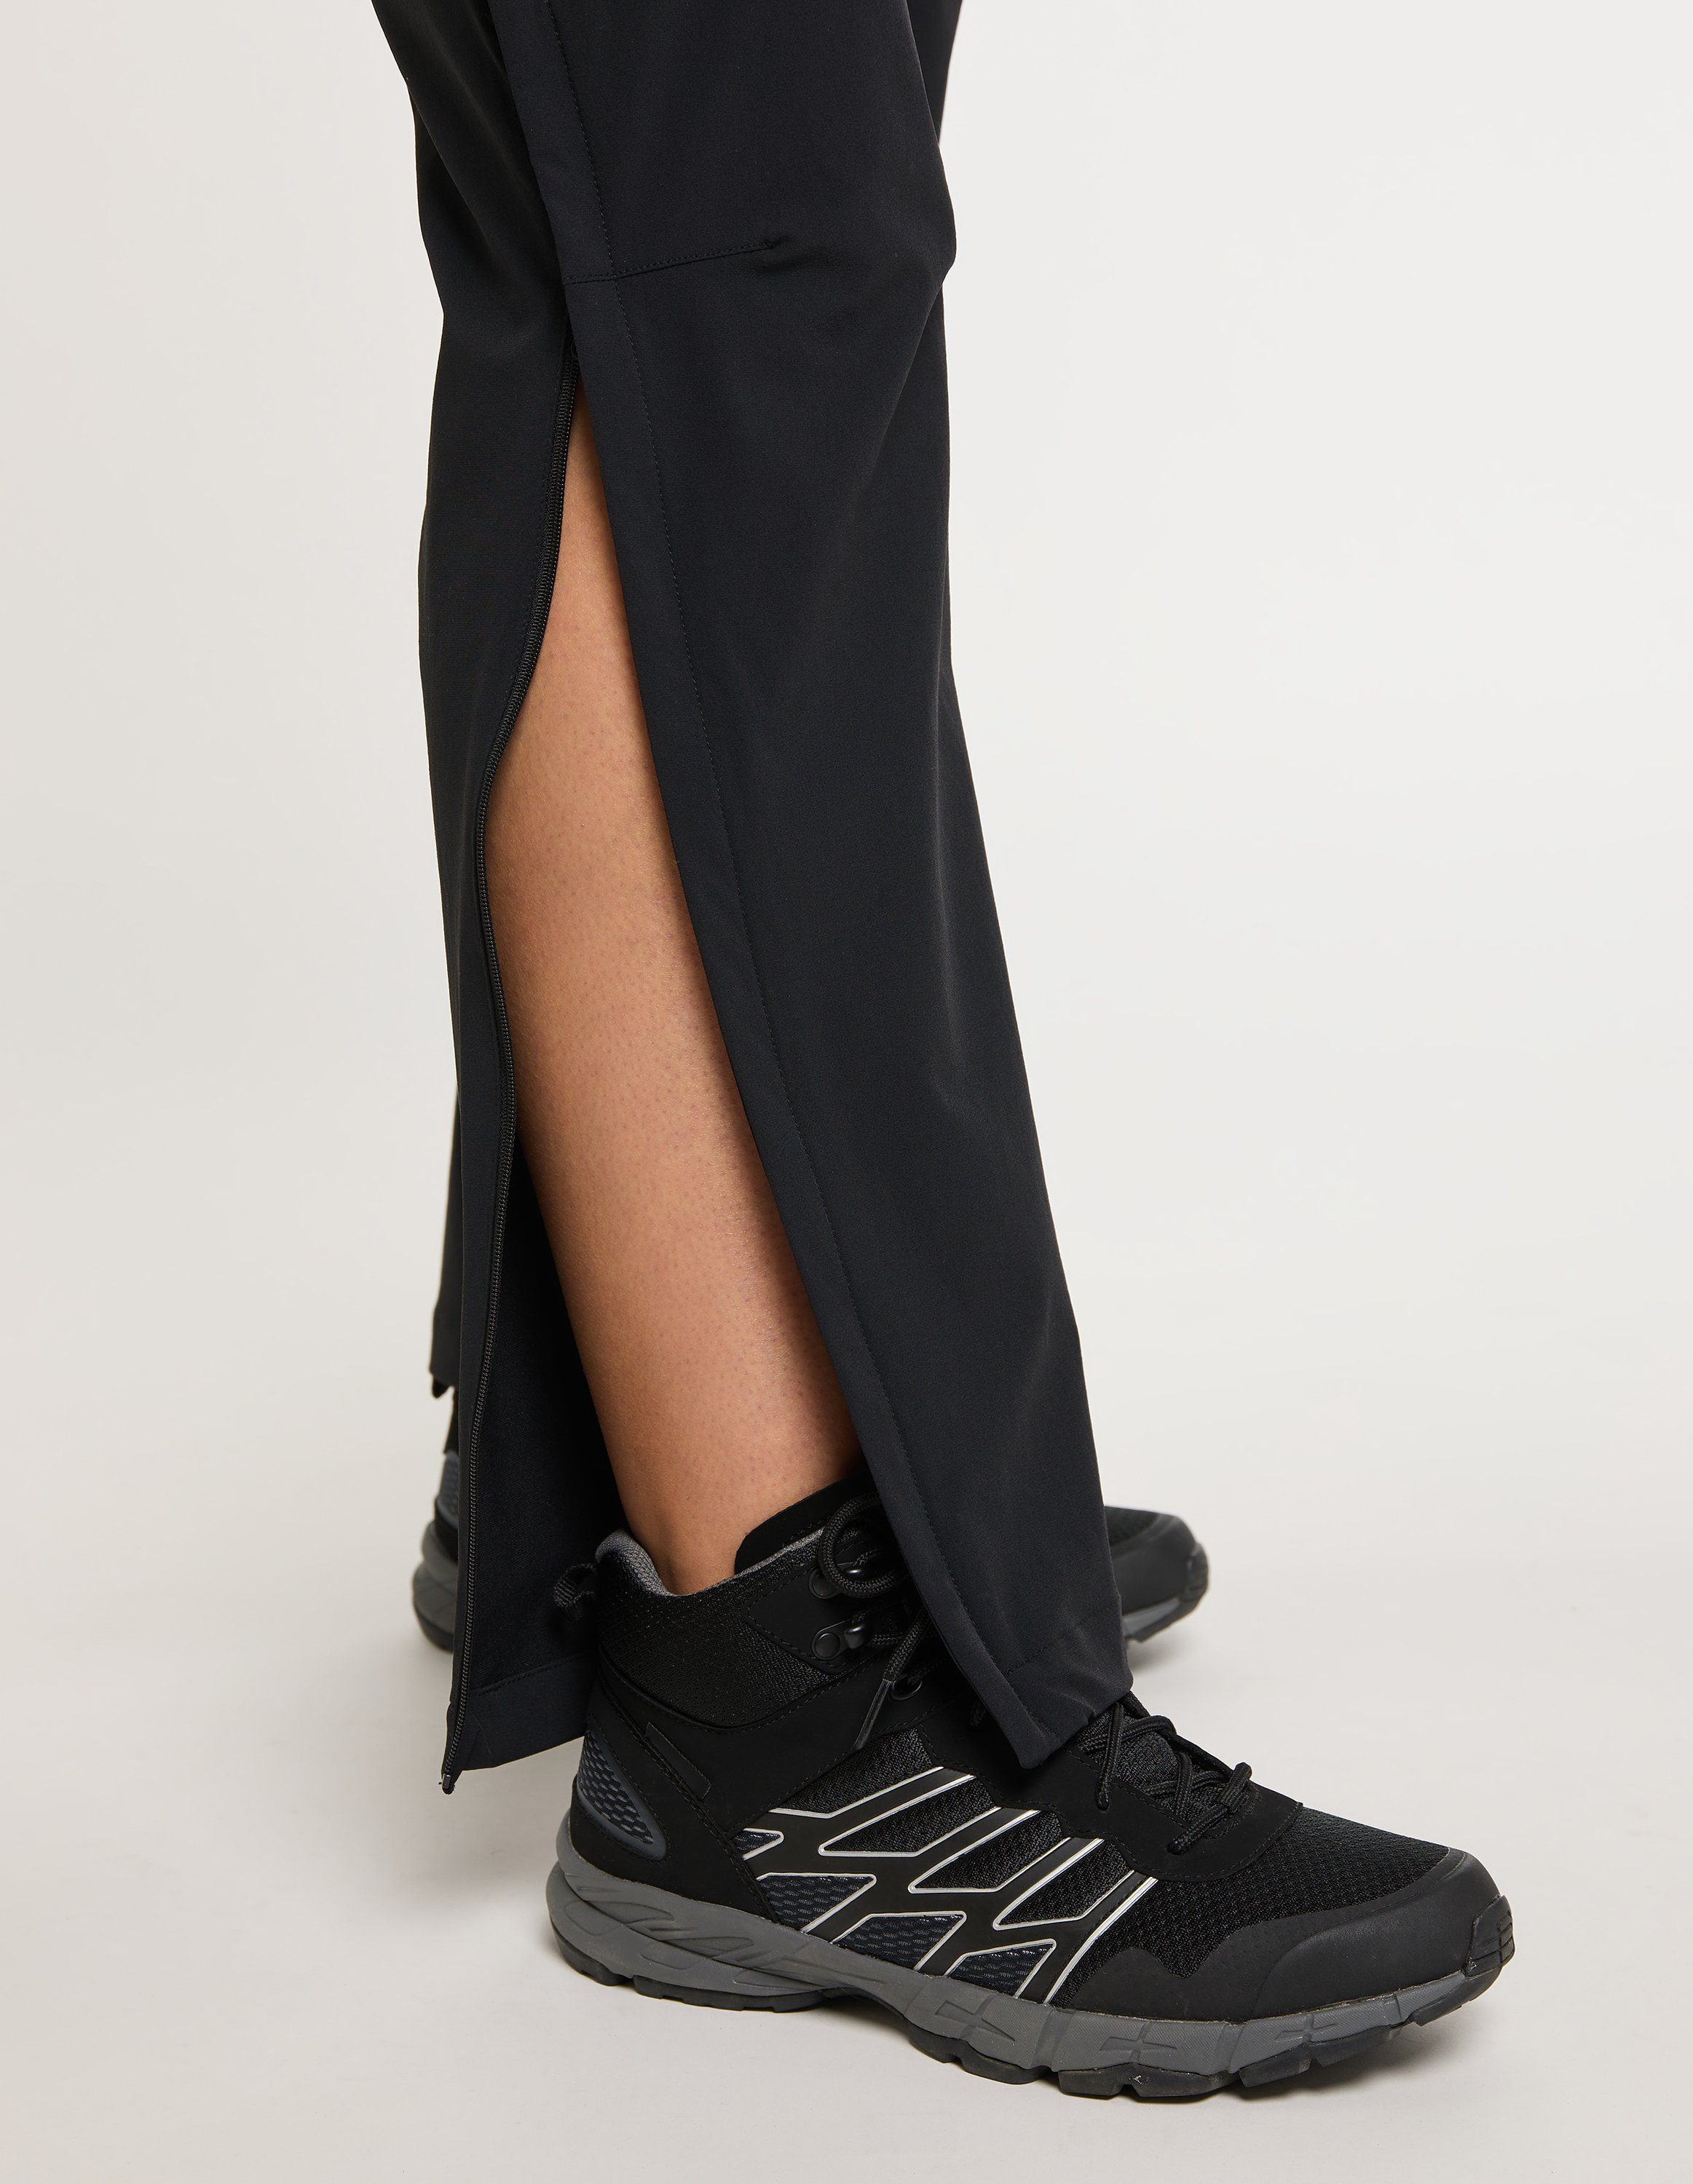 Hot-Sportswear Hose black Tofino Sporthose